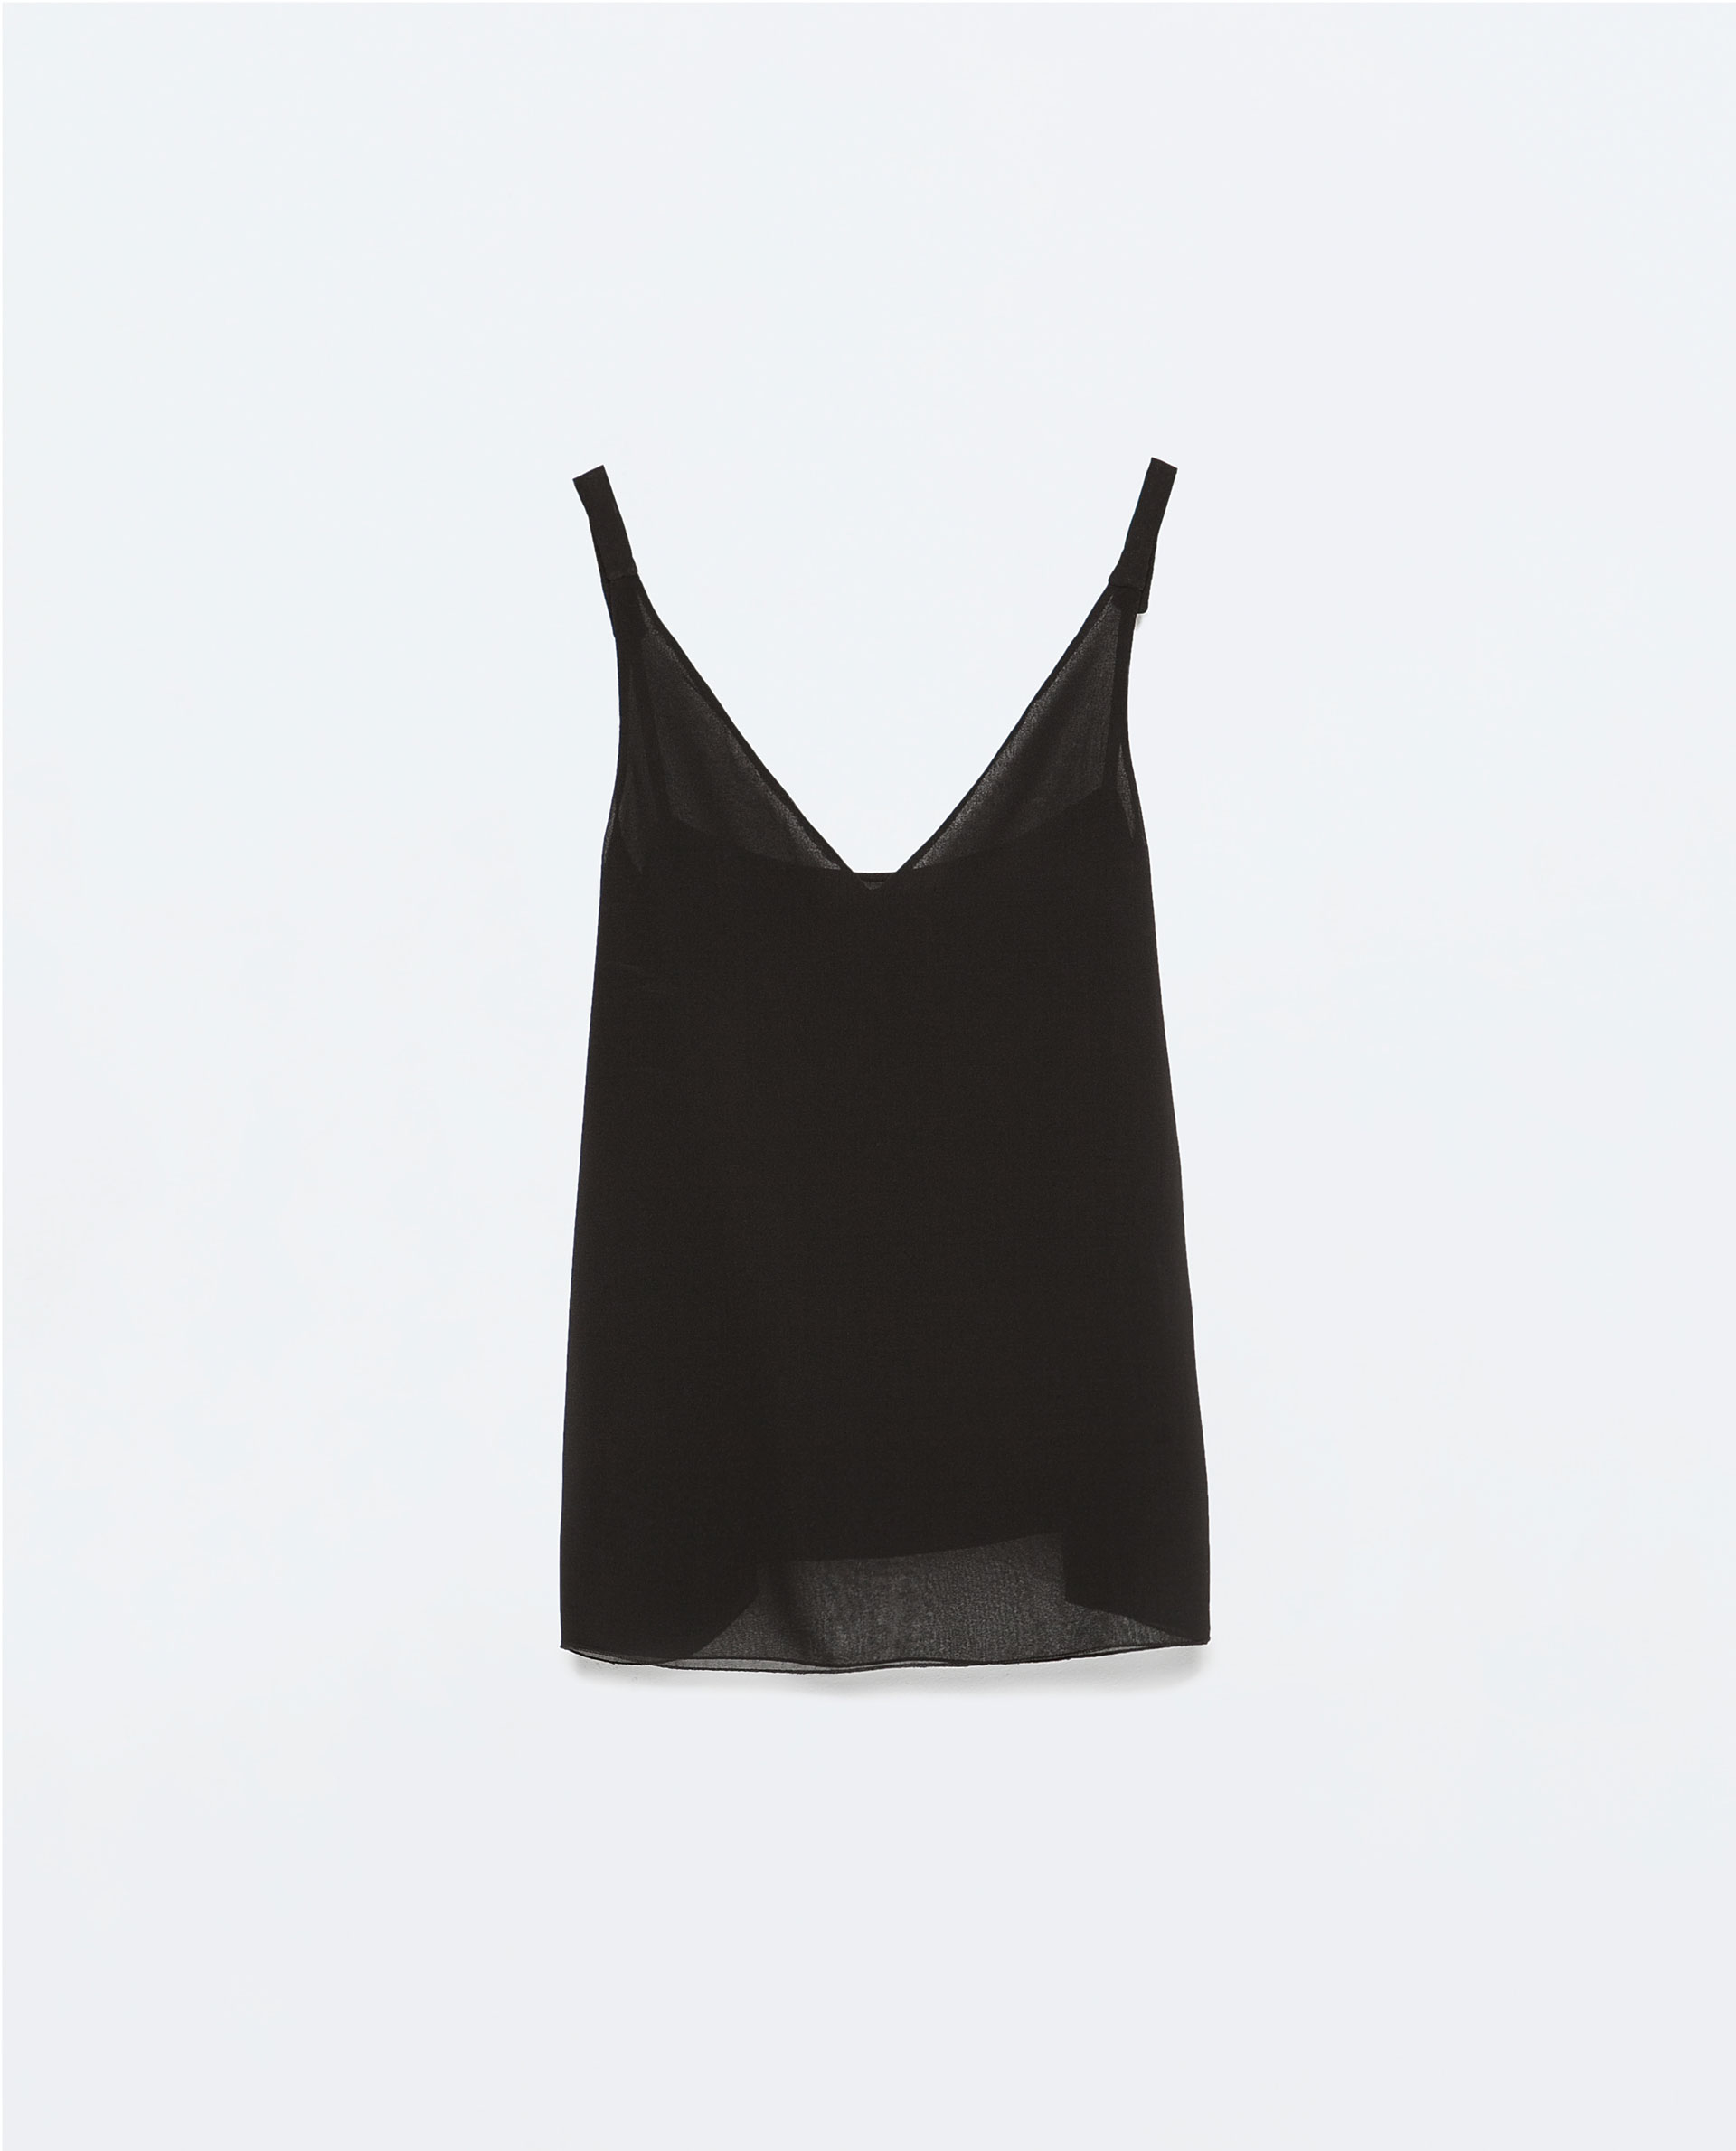 Zara Basic Camisole Top in Black | Lyst